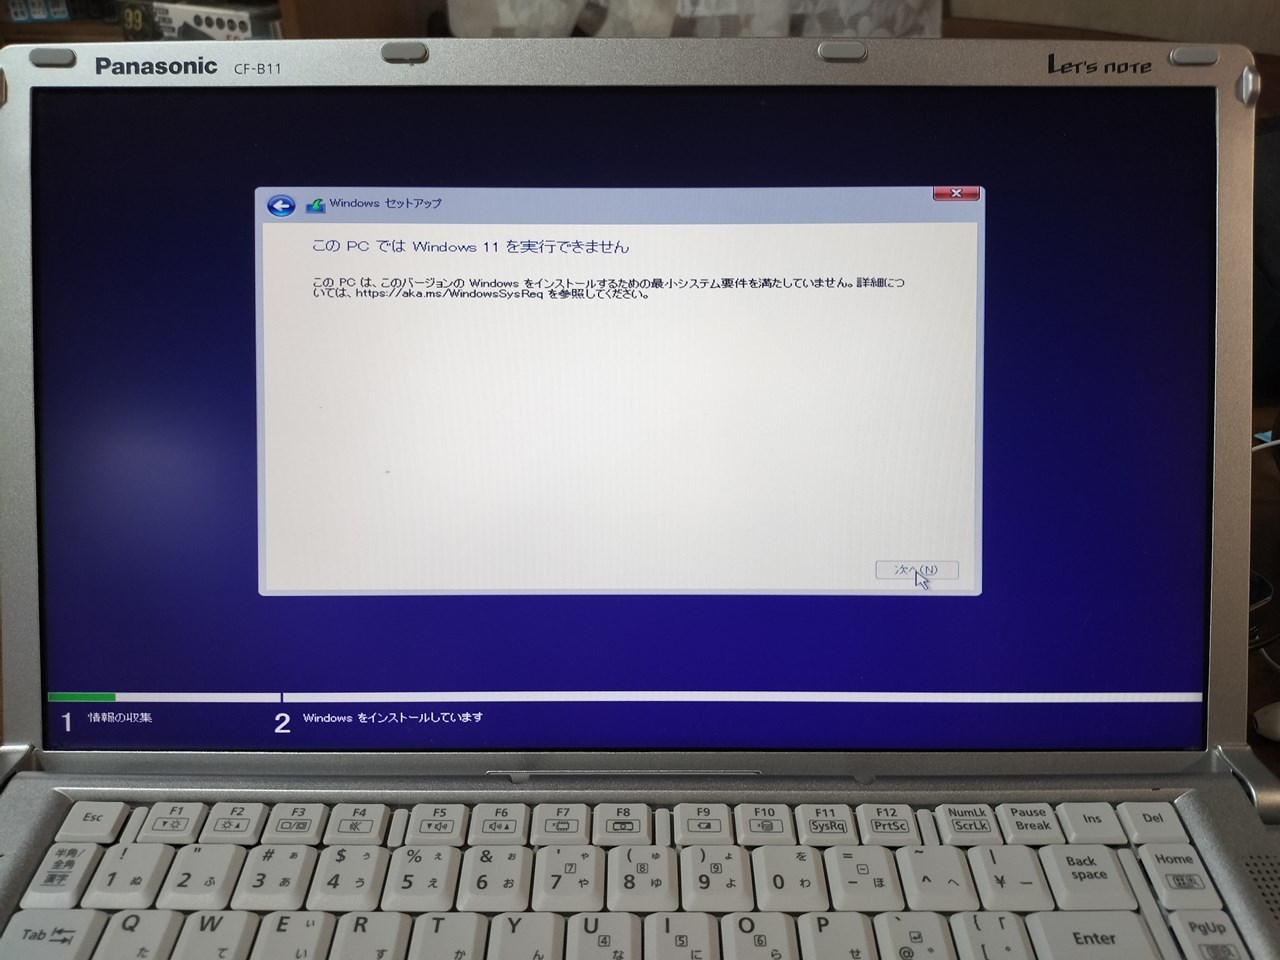 Panasonic Let's note CF-B11 Windows 11 Proにアップグレードした